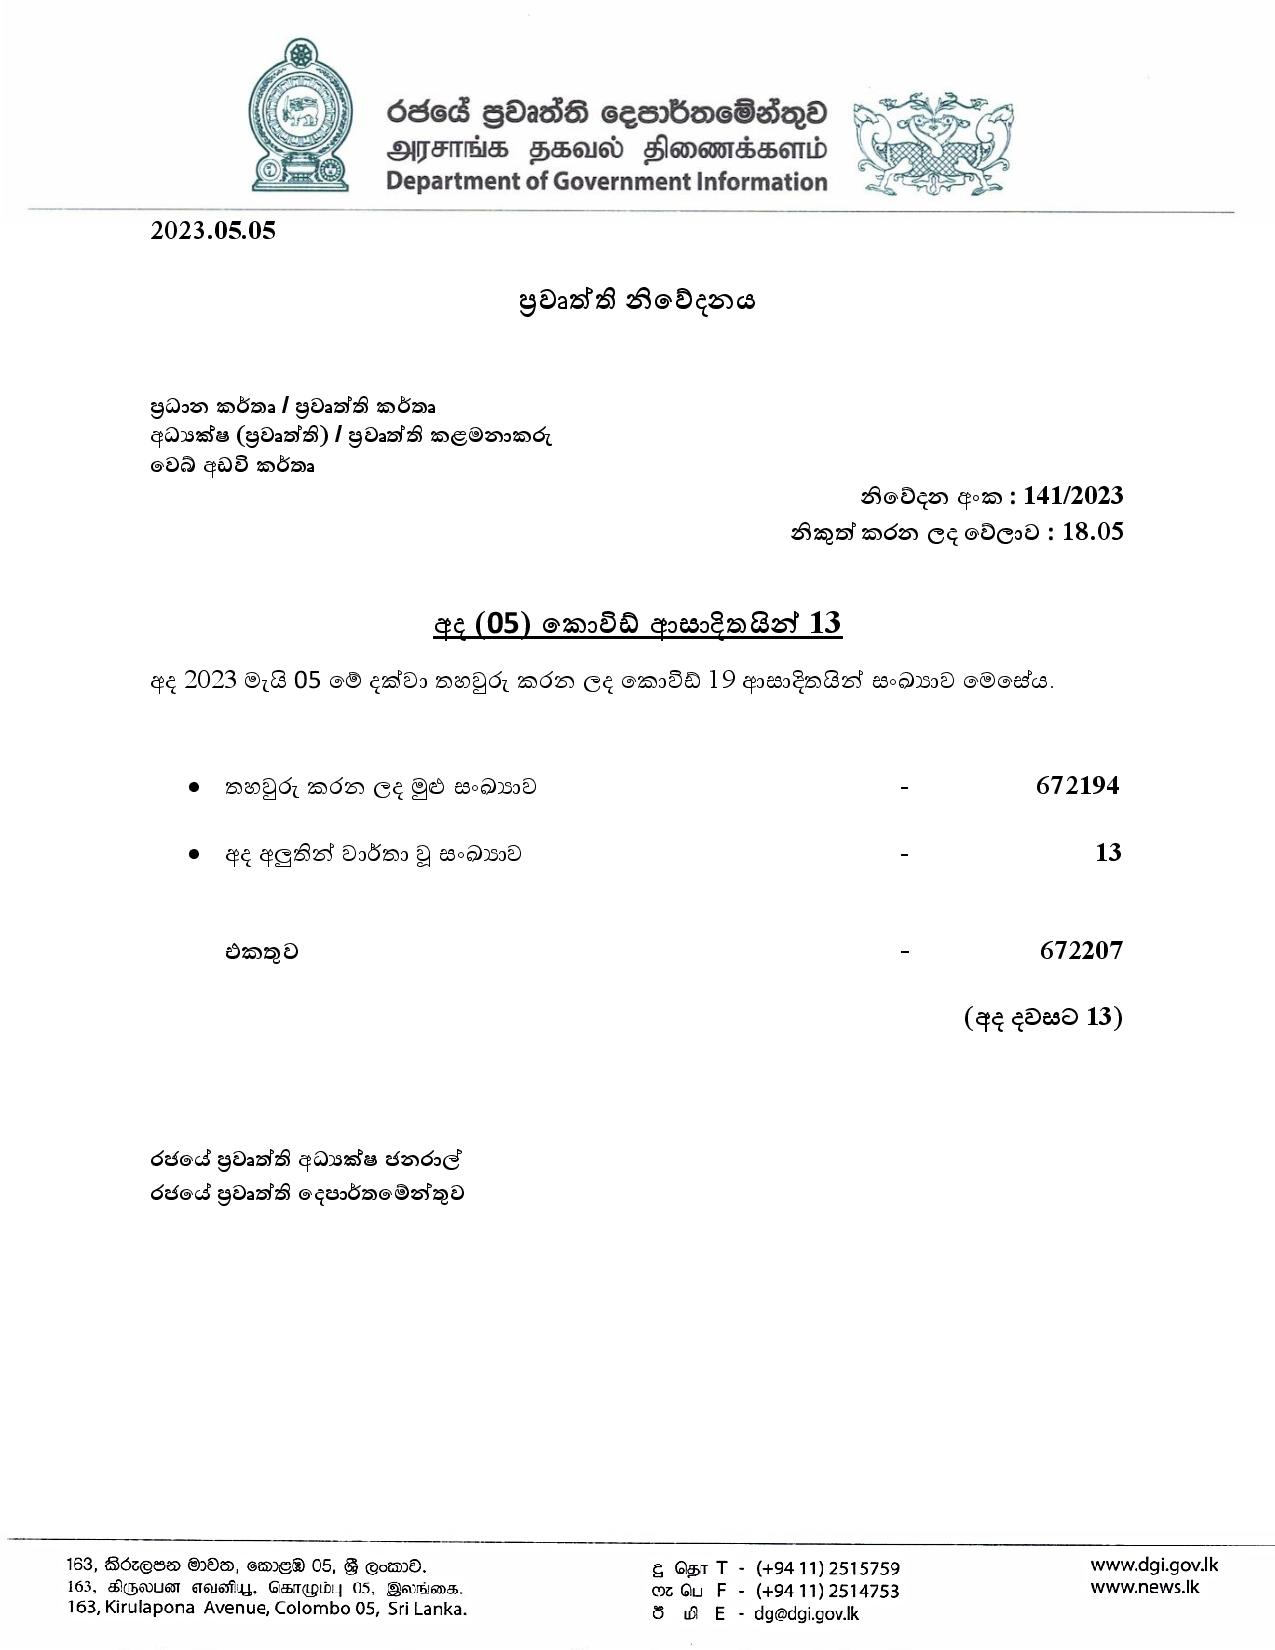 Release No 141 Sinhala page 001